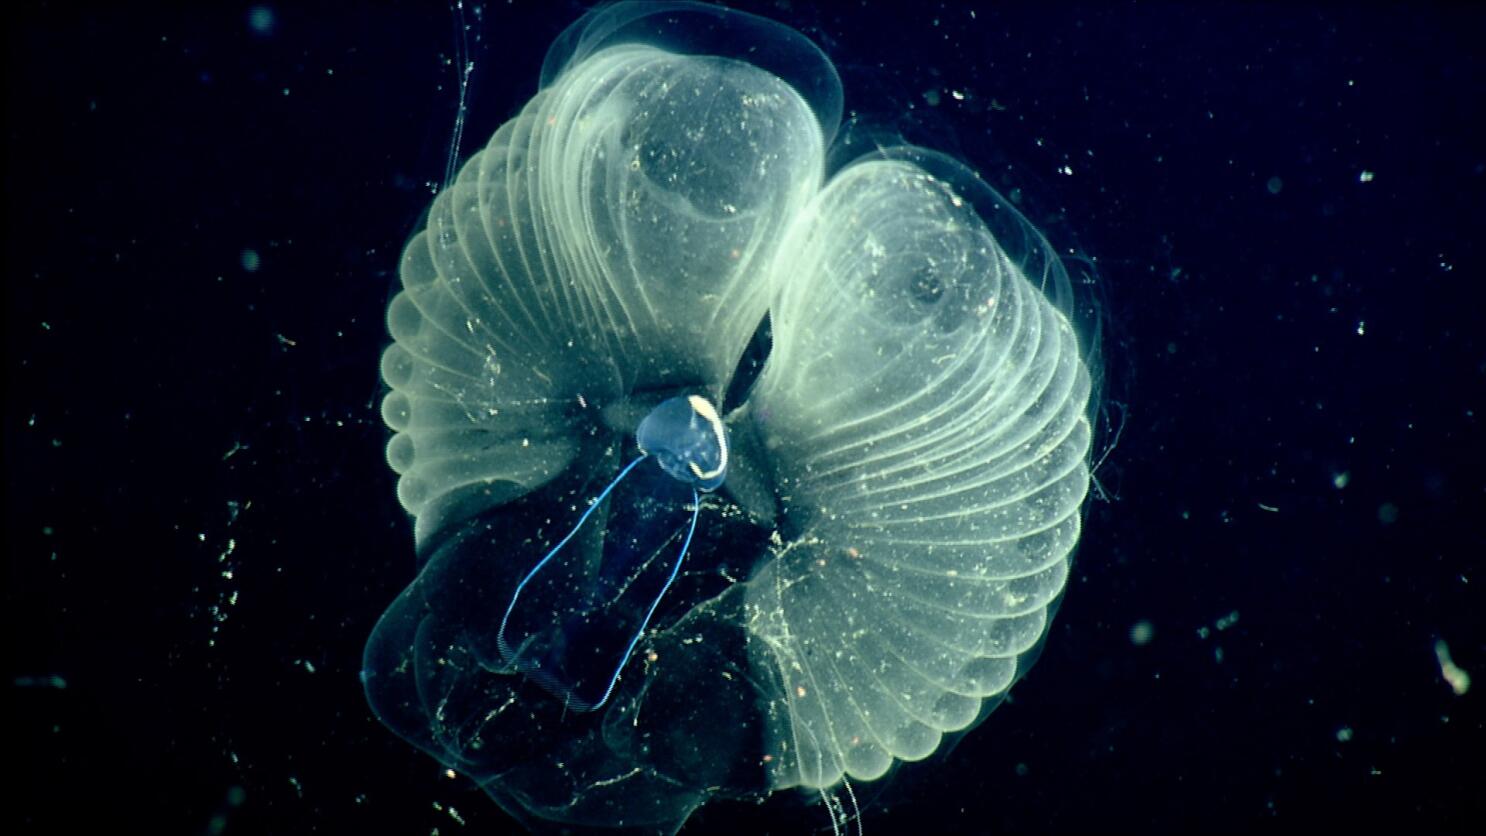 seven pounds jellyfish tank